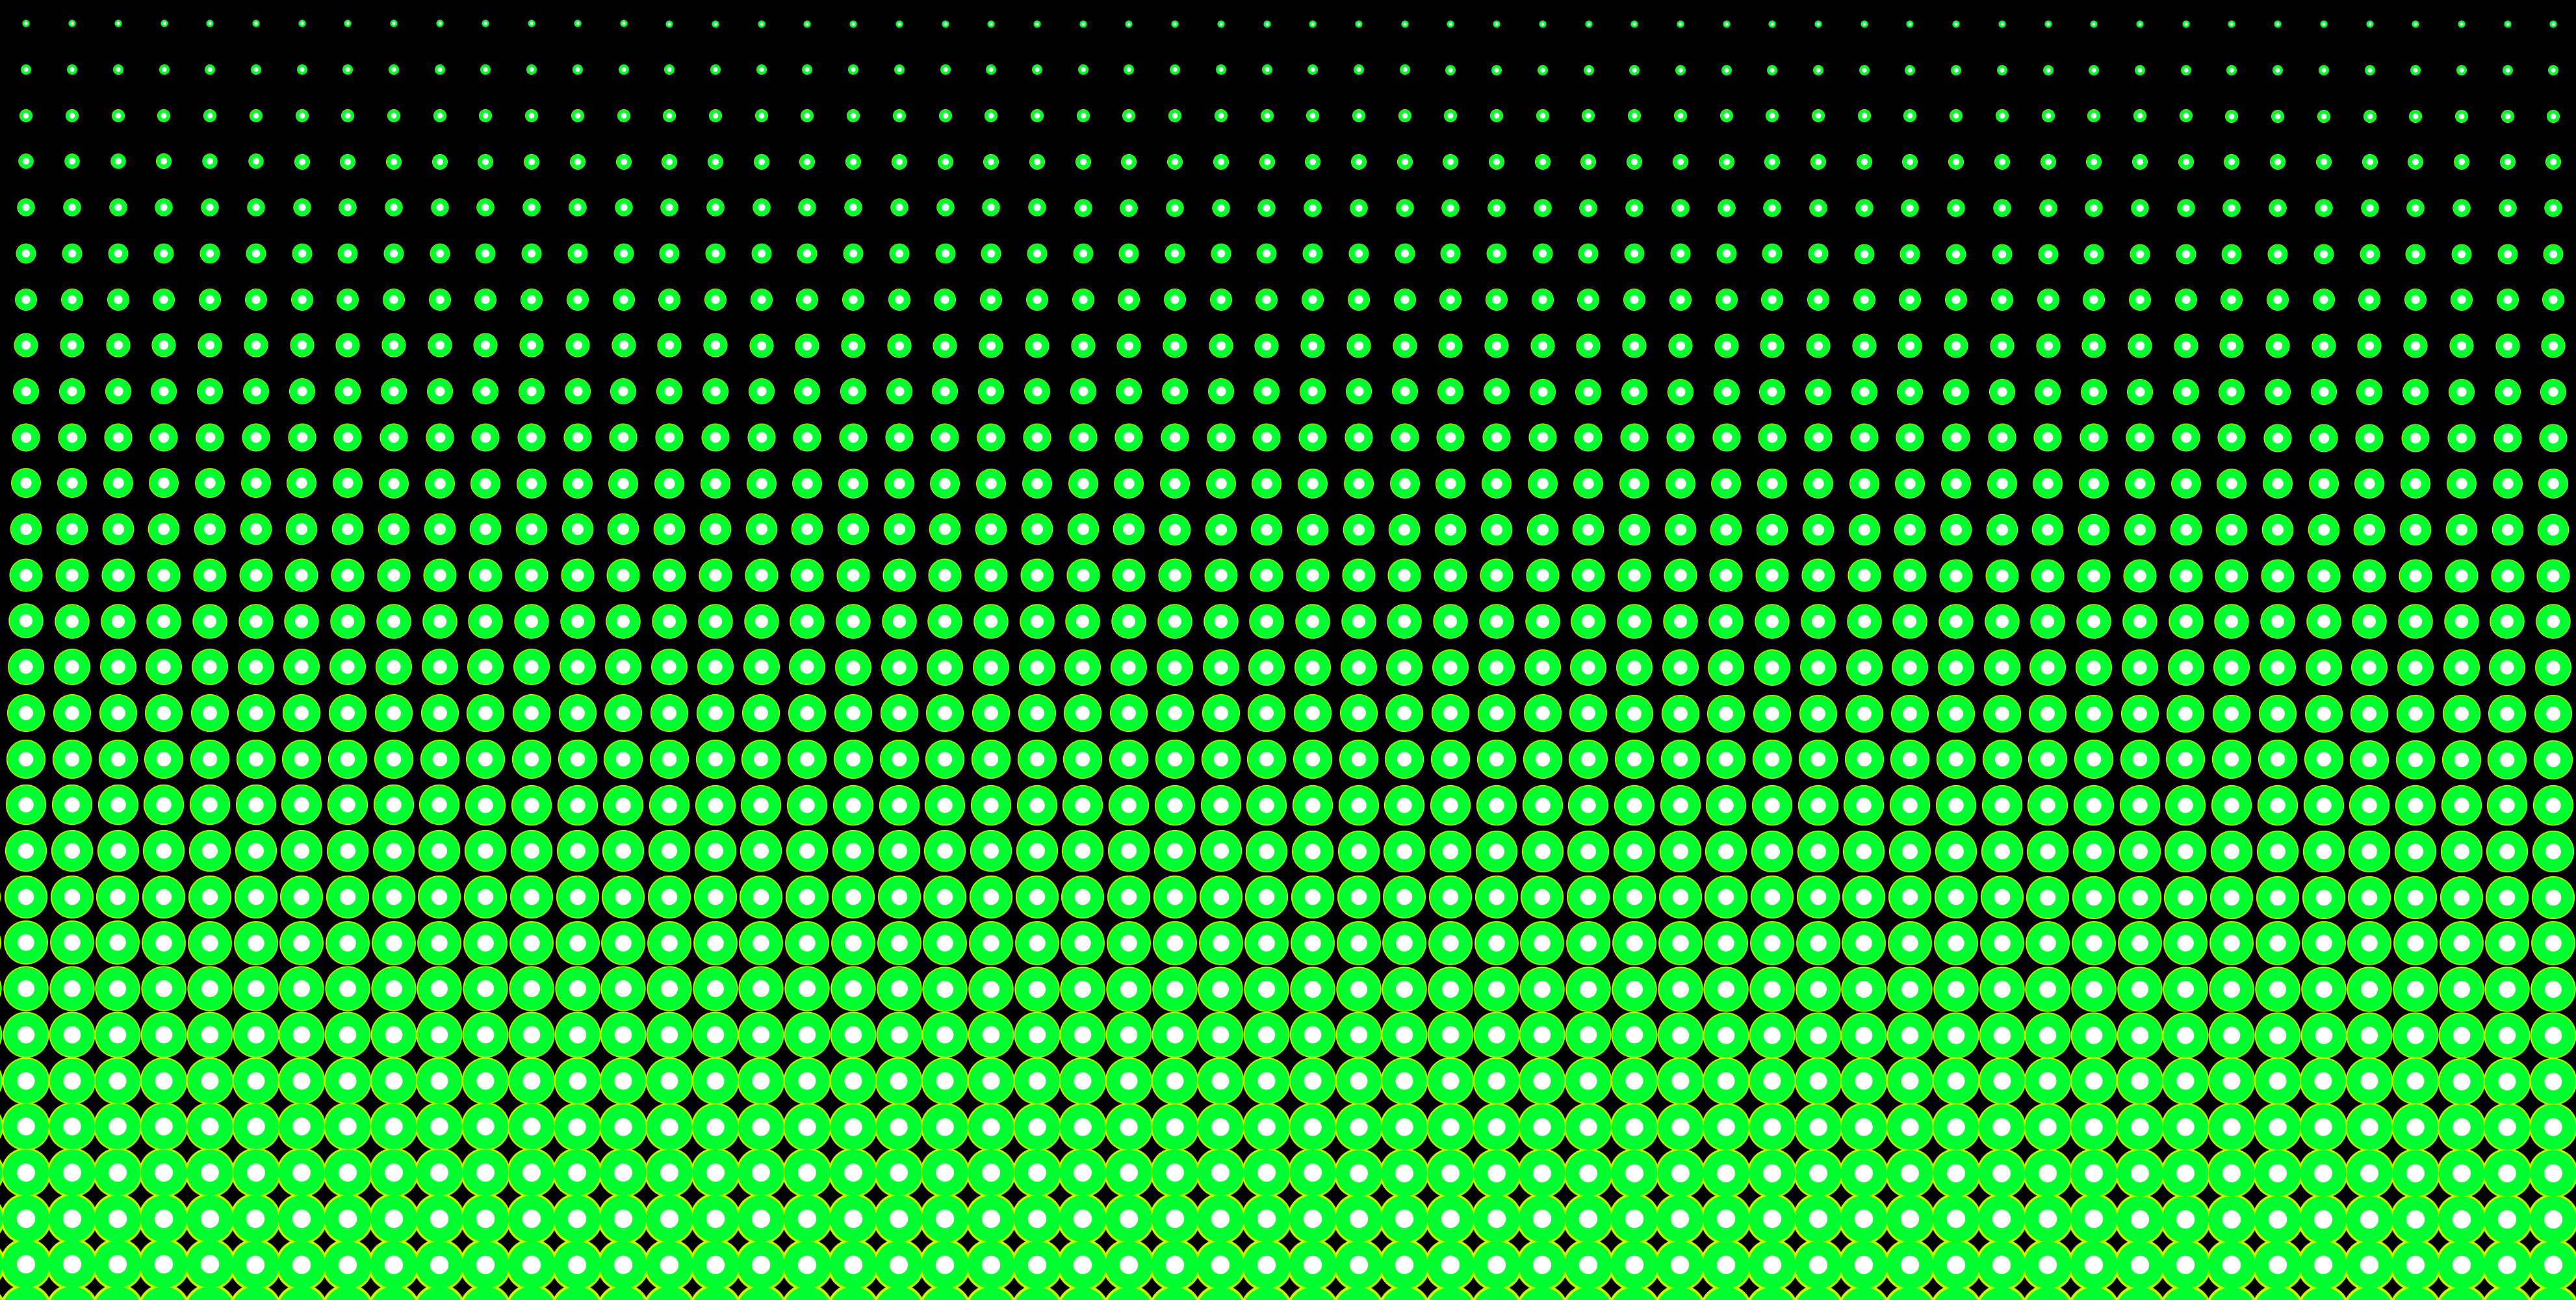 Pattern Green Wallpaper 1920x1080 px Free Download